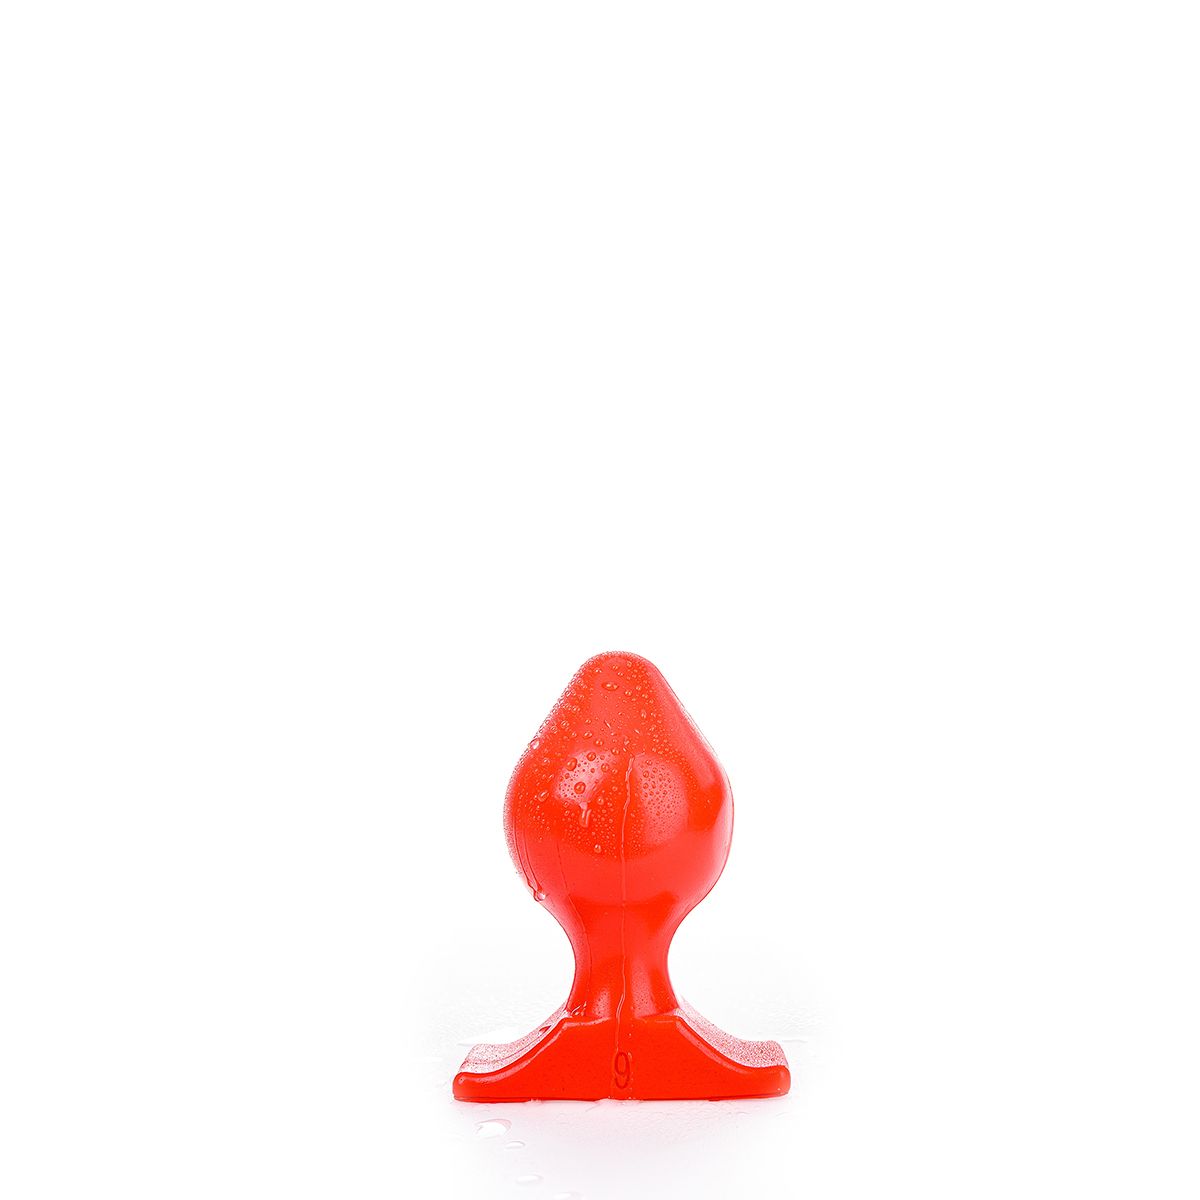 All Red - Buttplug 17 x 9 cm - Rood-Erotiekvoordeel.nl